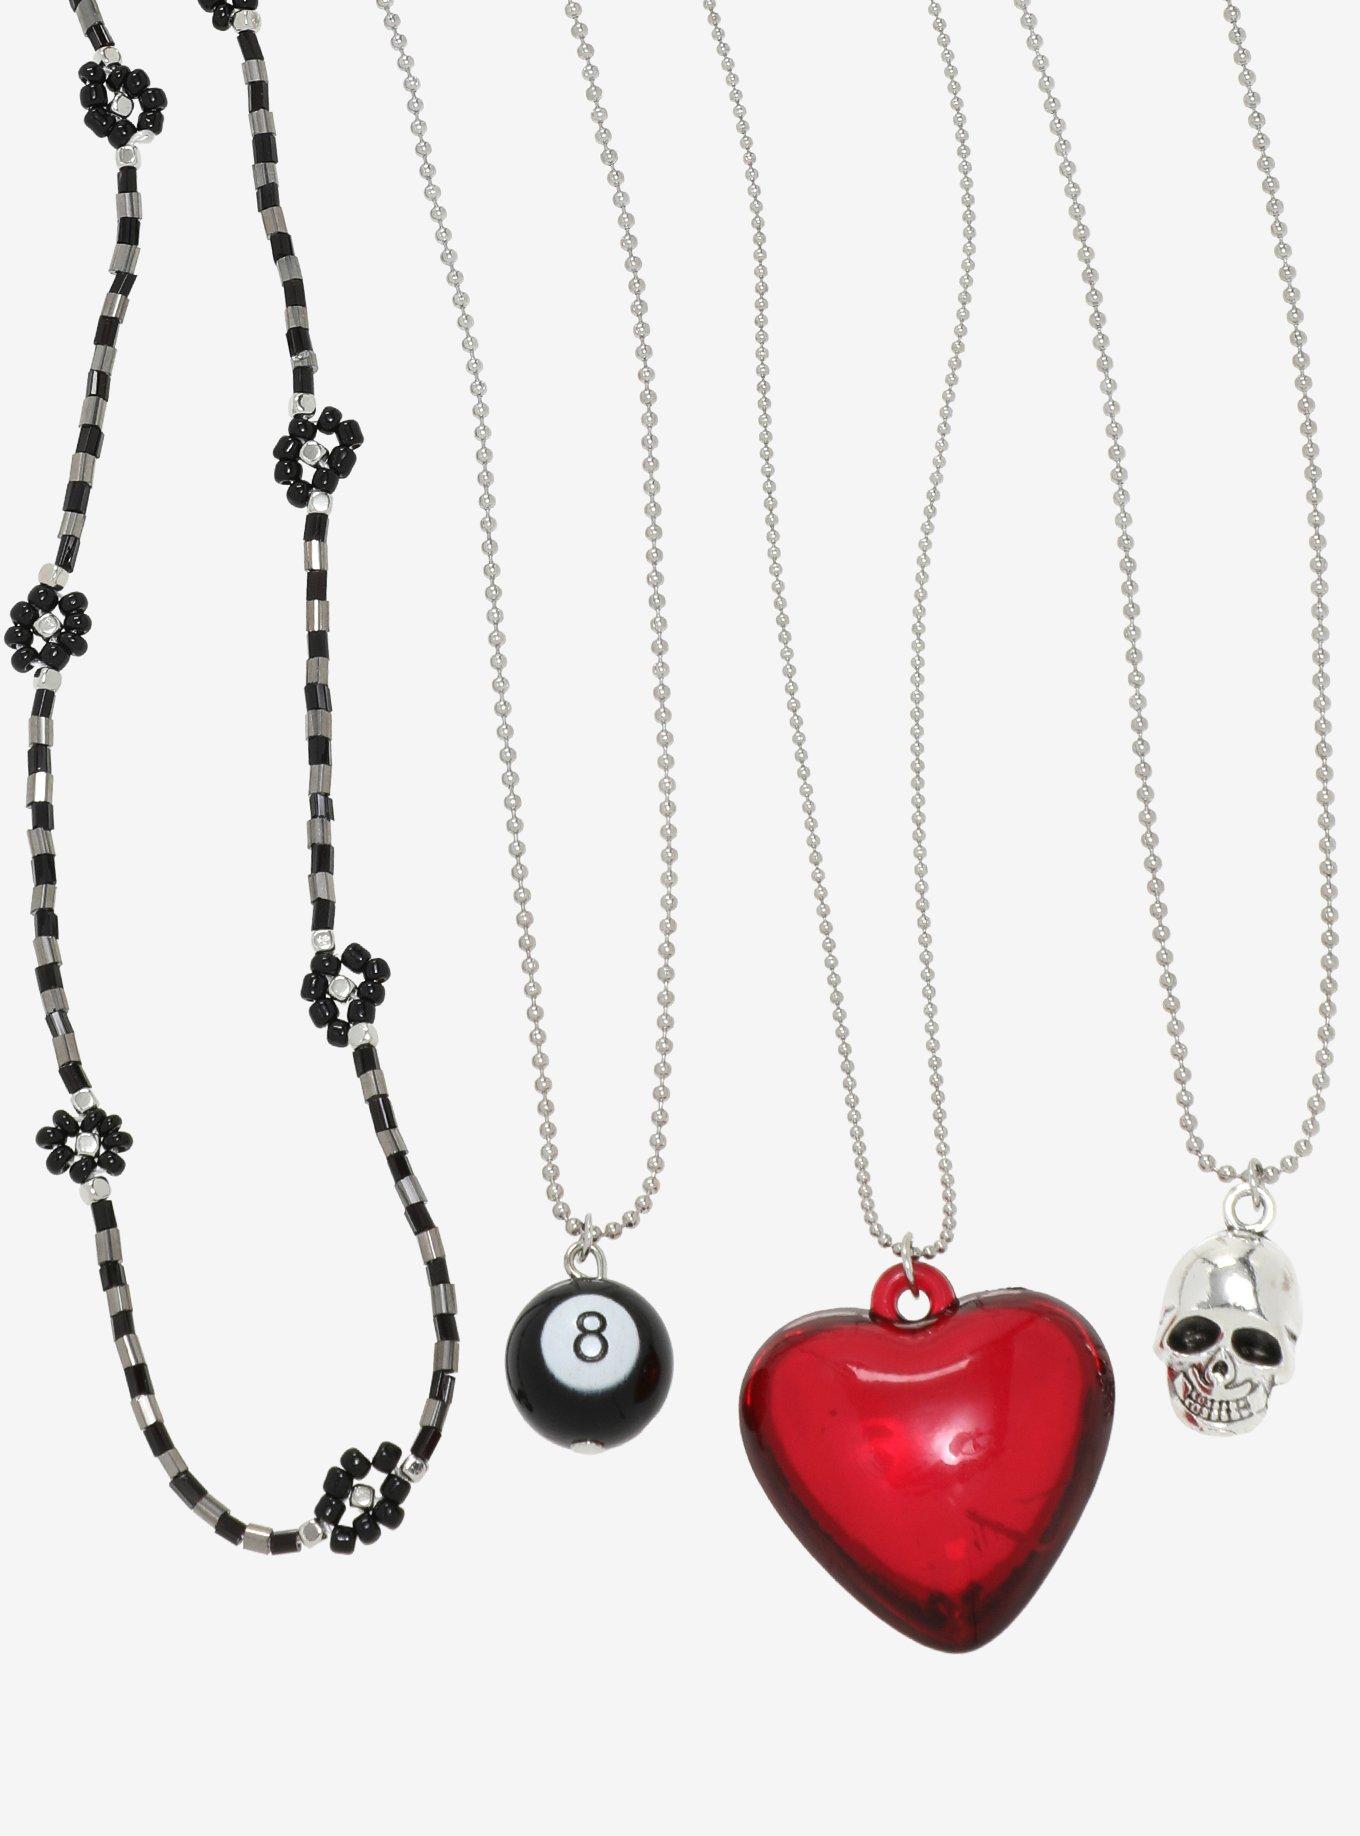 Social Collision 8 Ball Skull Heart Necklace Set